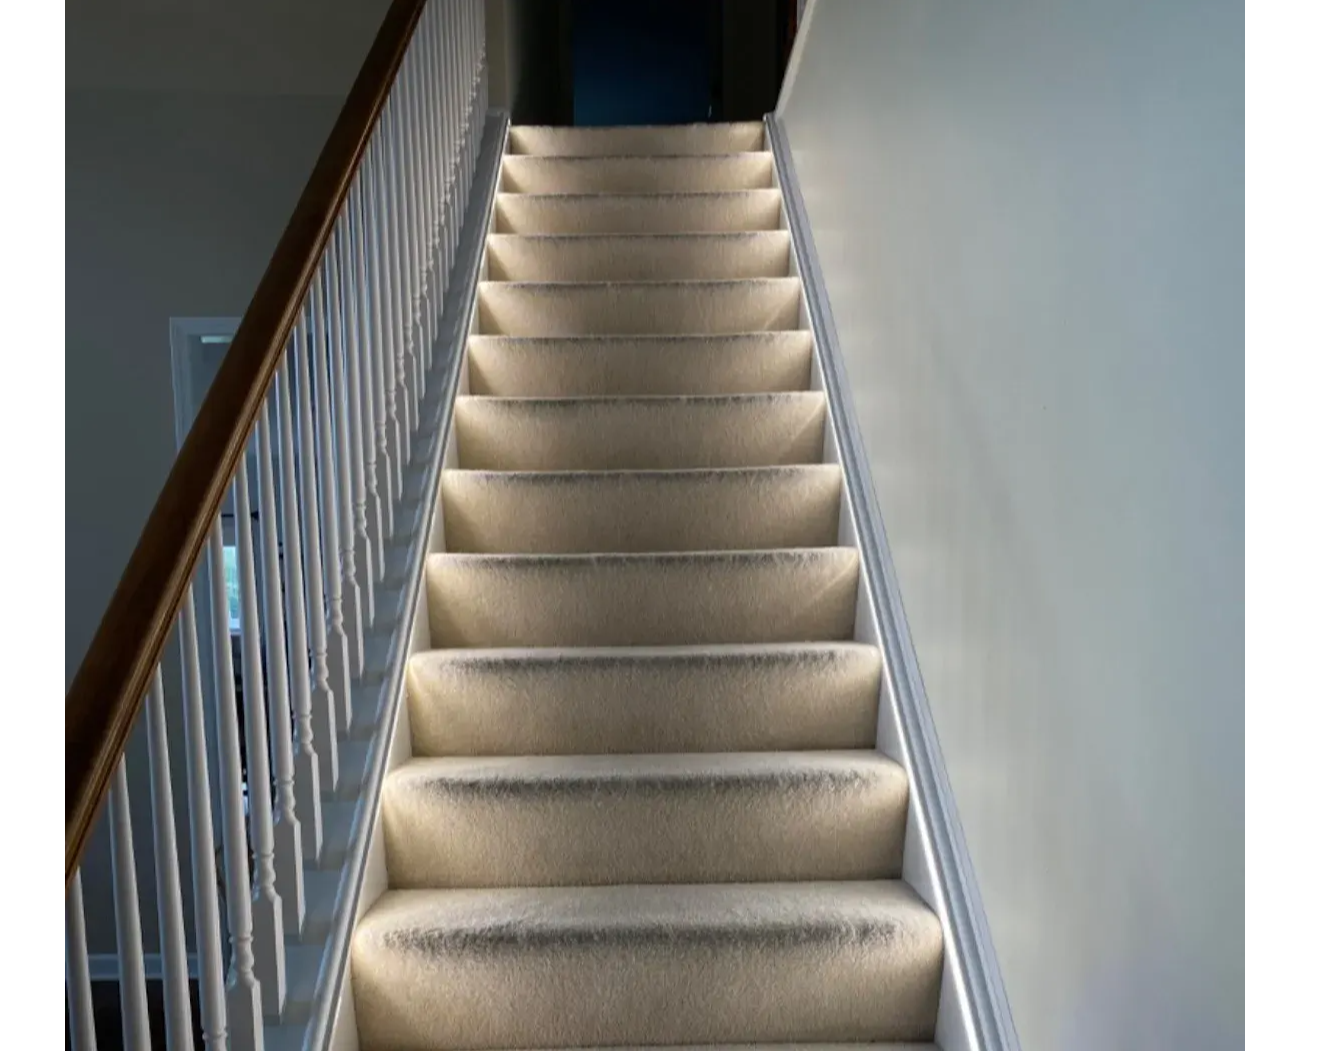 Stairway lighting design ideas using LED strip lights